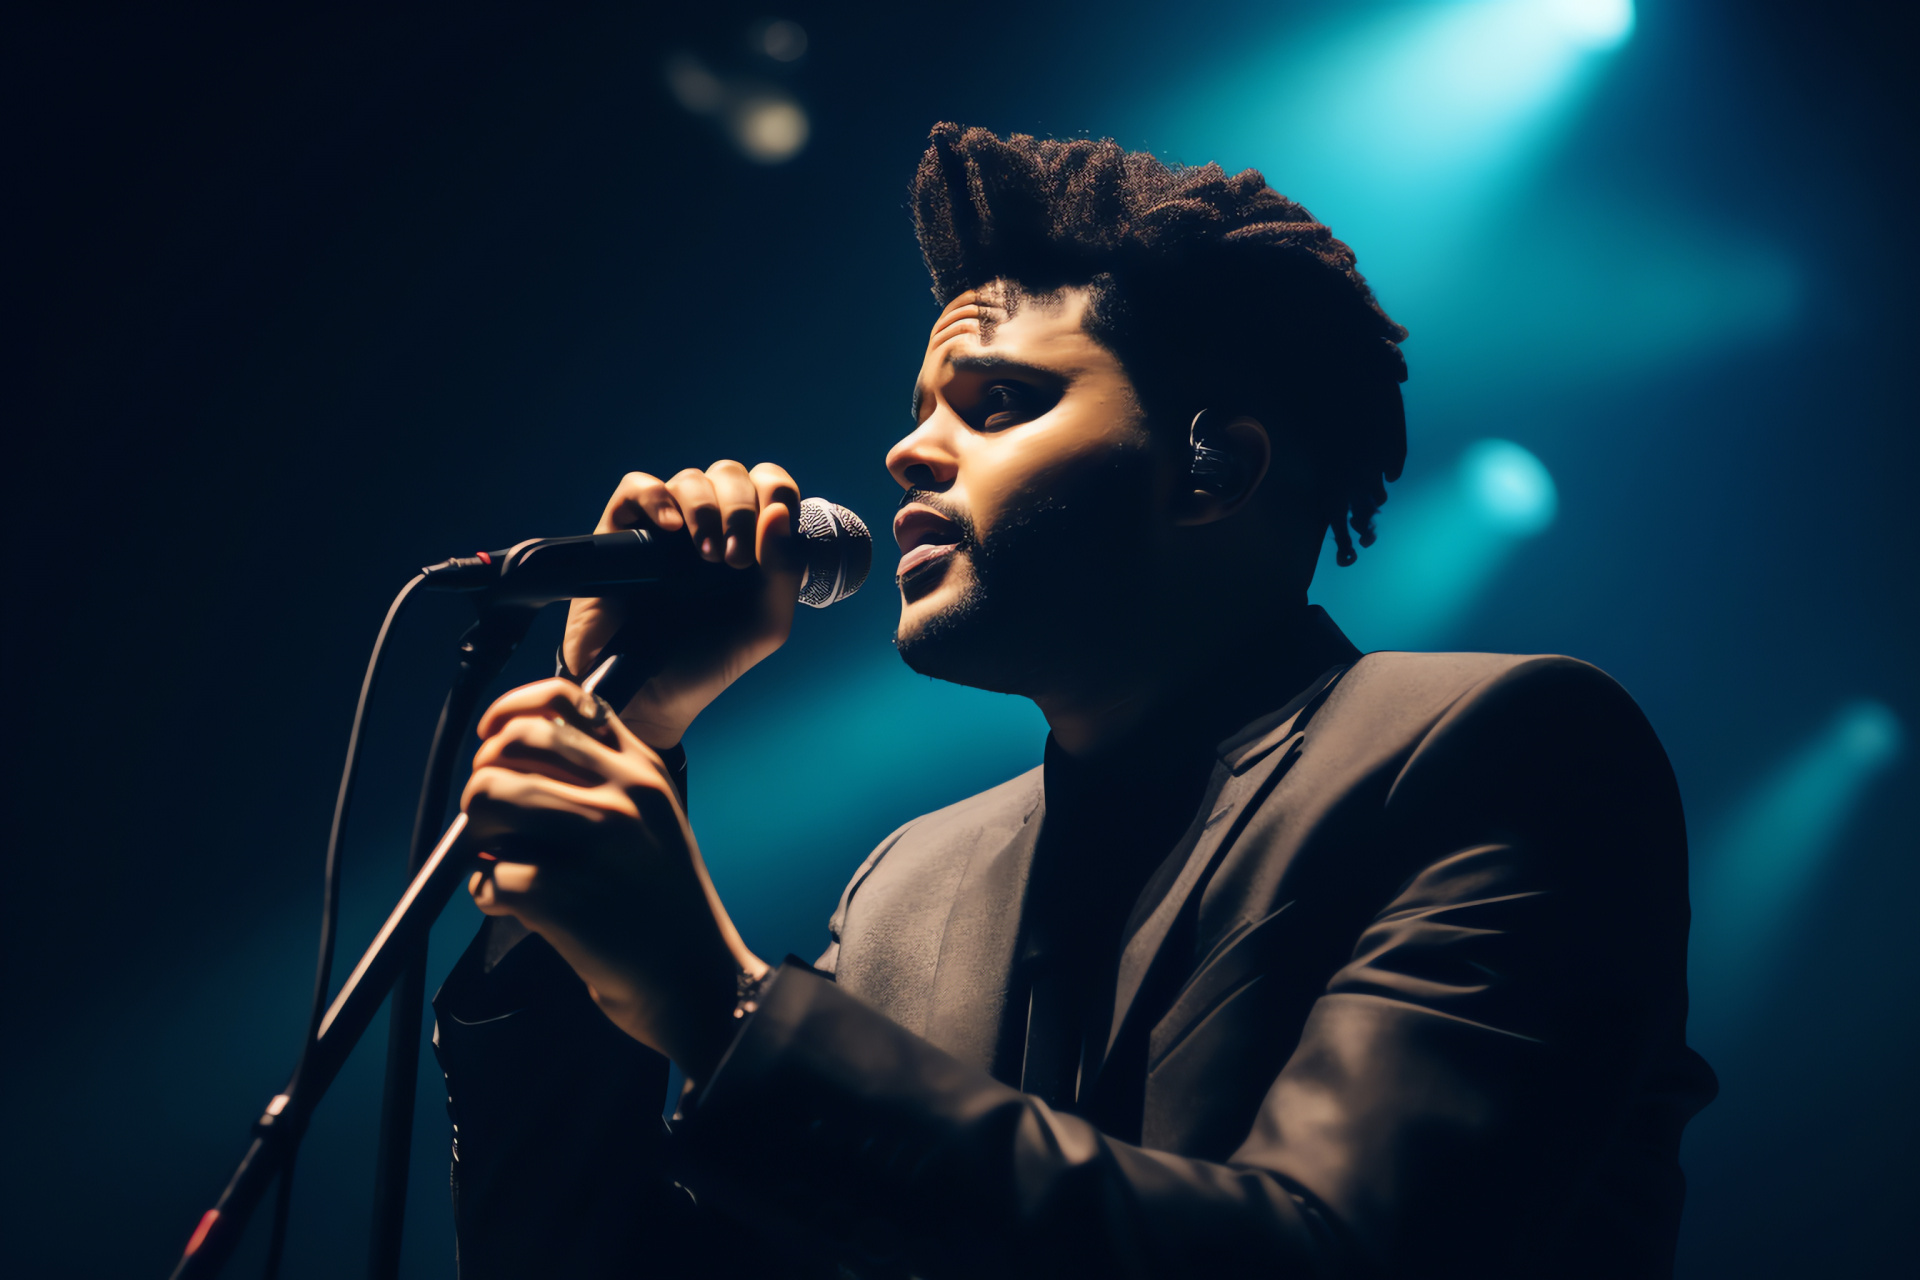 Performer The Weeknd, Album promotion, Singer spotlight, Formal wear, Sound performance, HD Desktop Wallpaper